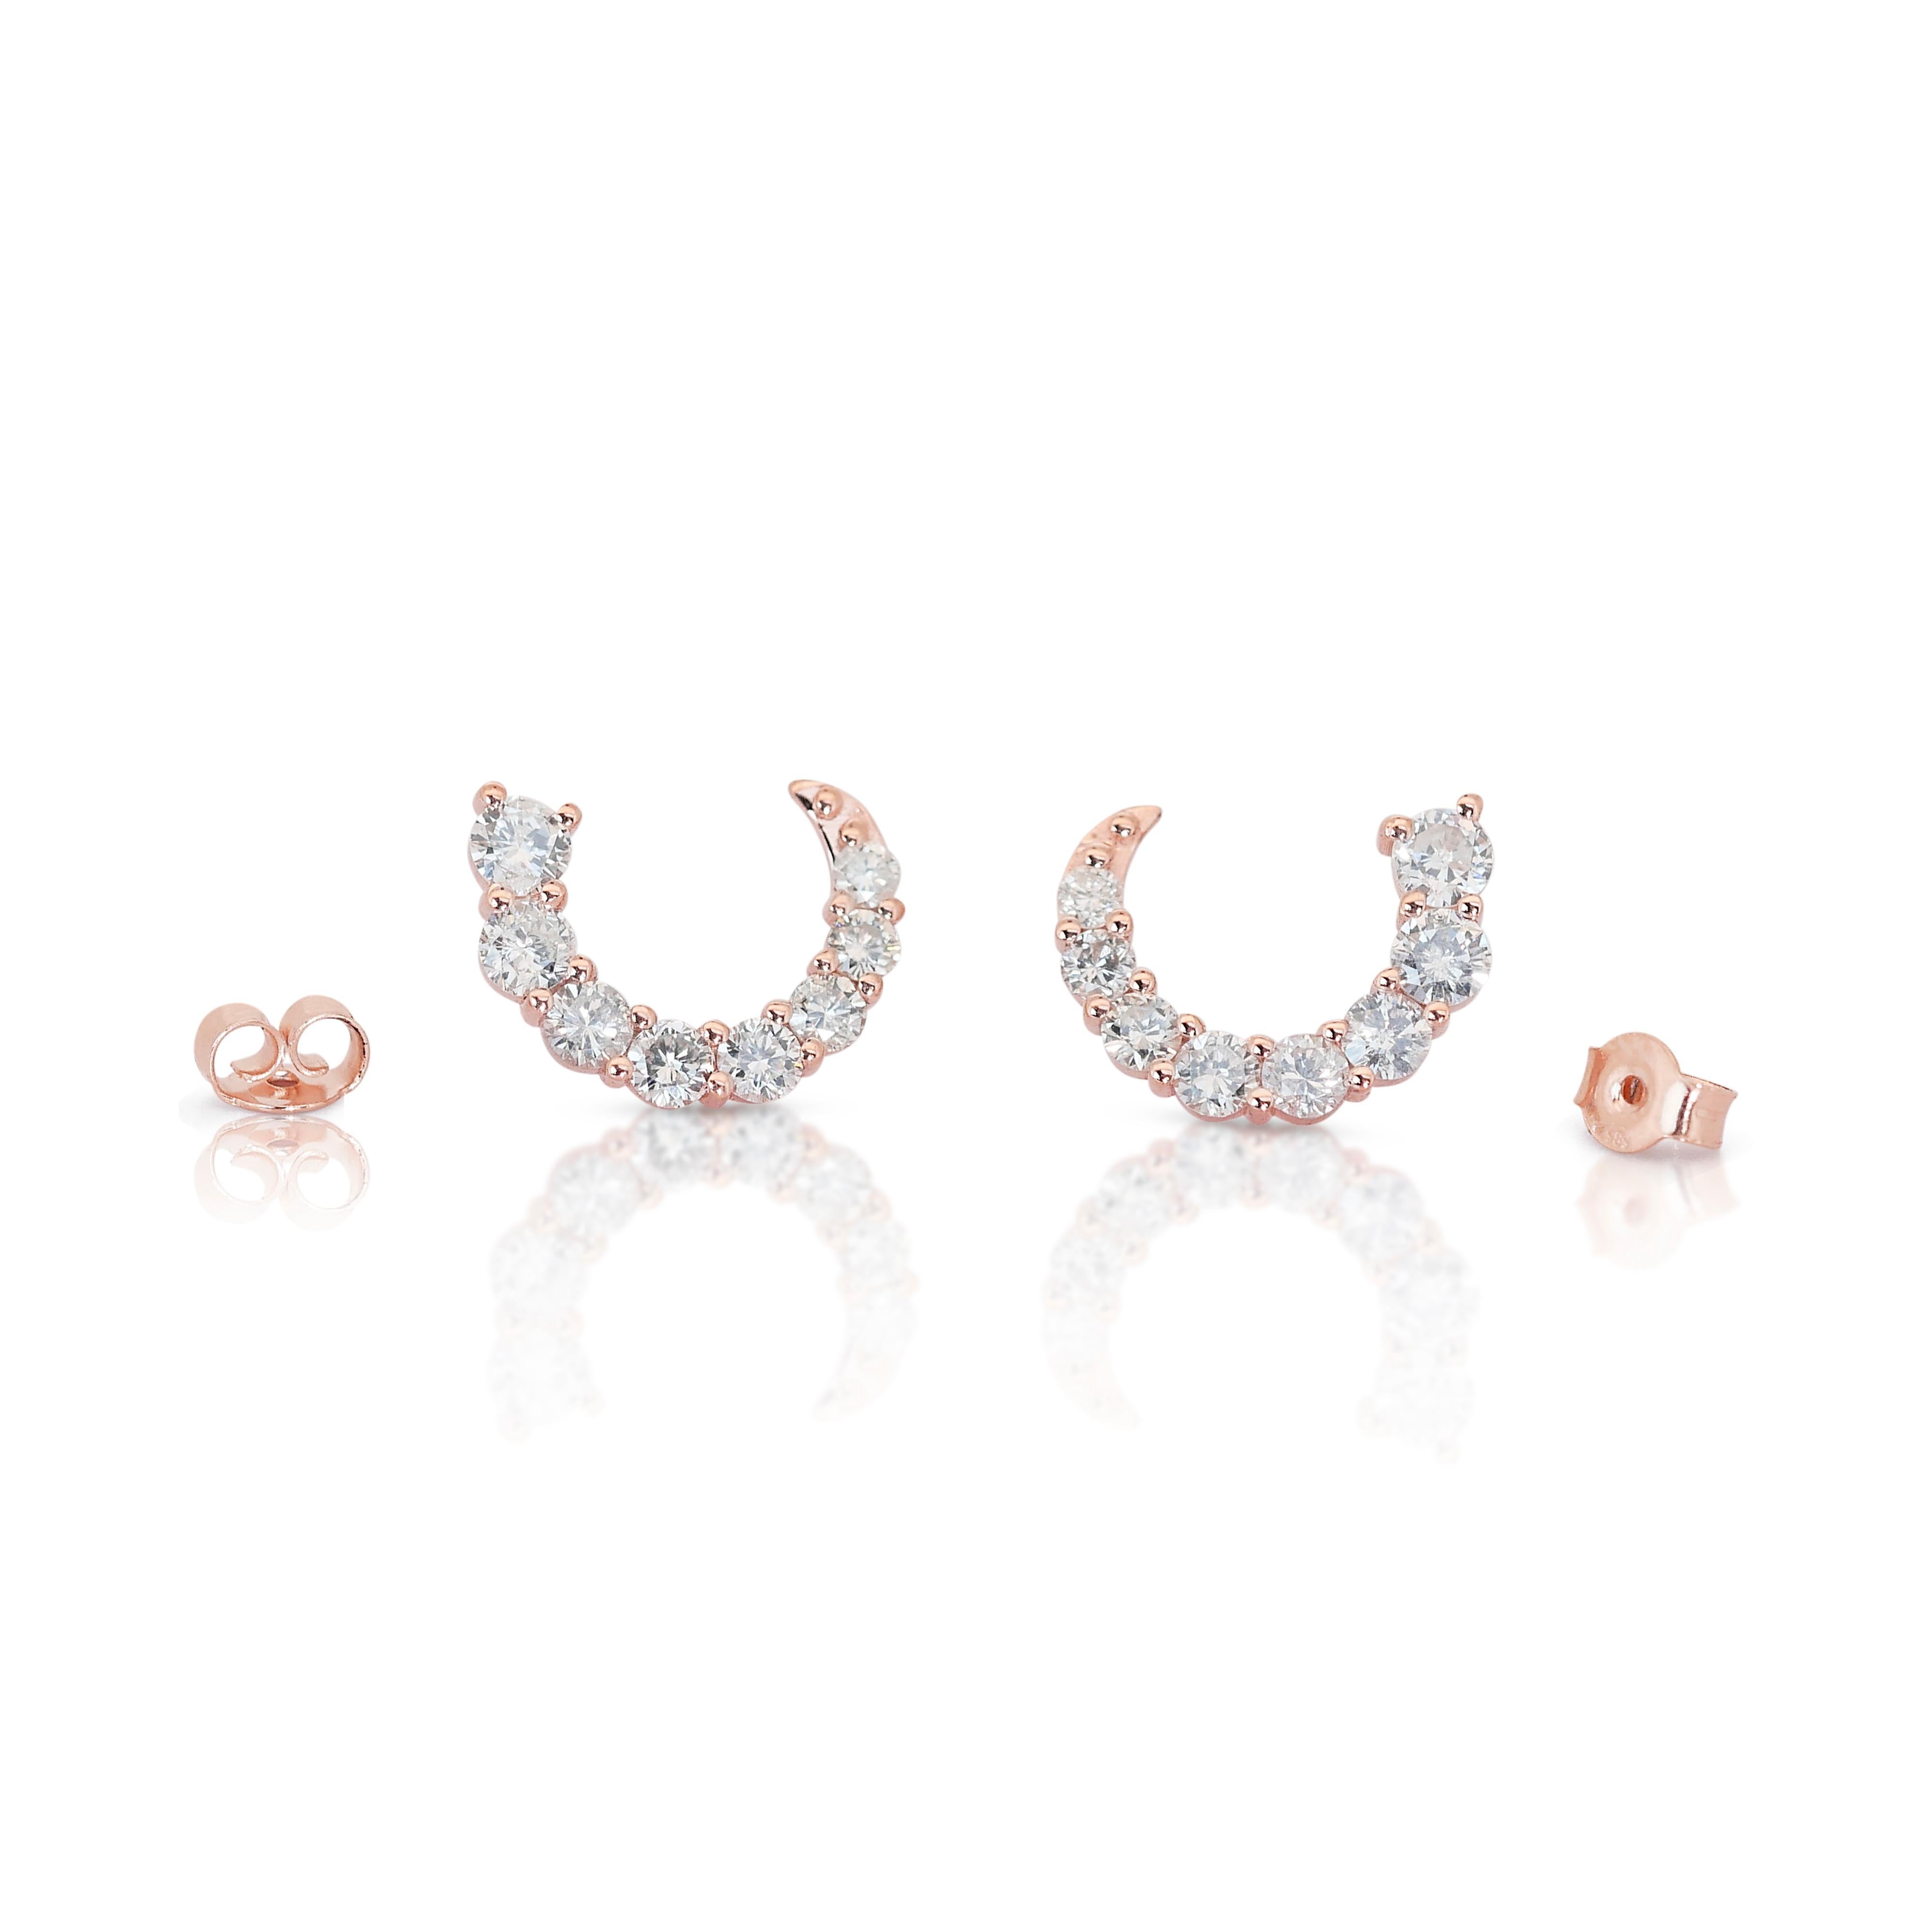 Fascinating 14k Rose Gold Natural Diamond Hoop Earrings w/1.85 ct -IGI Certified 4